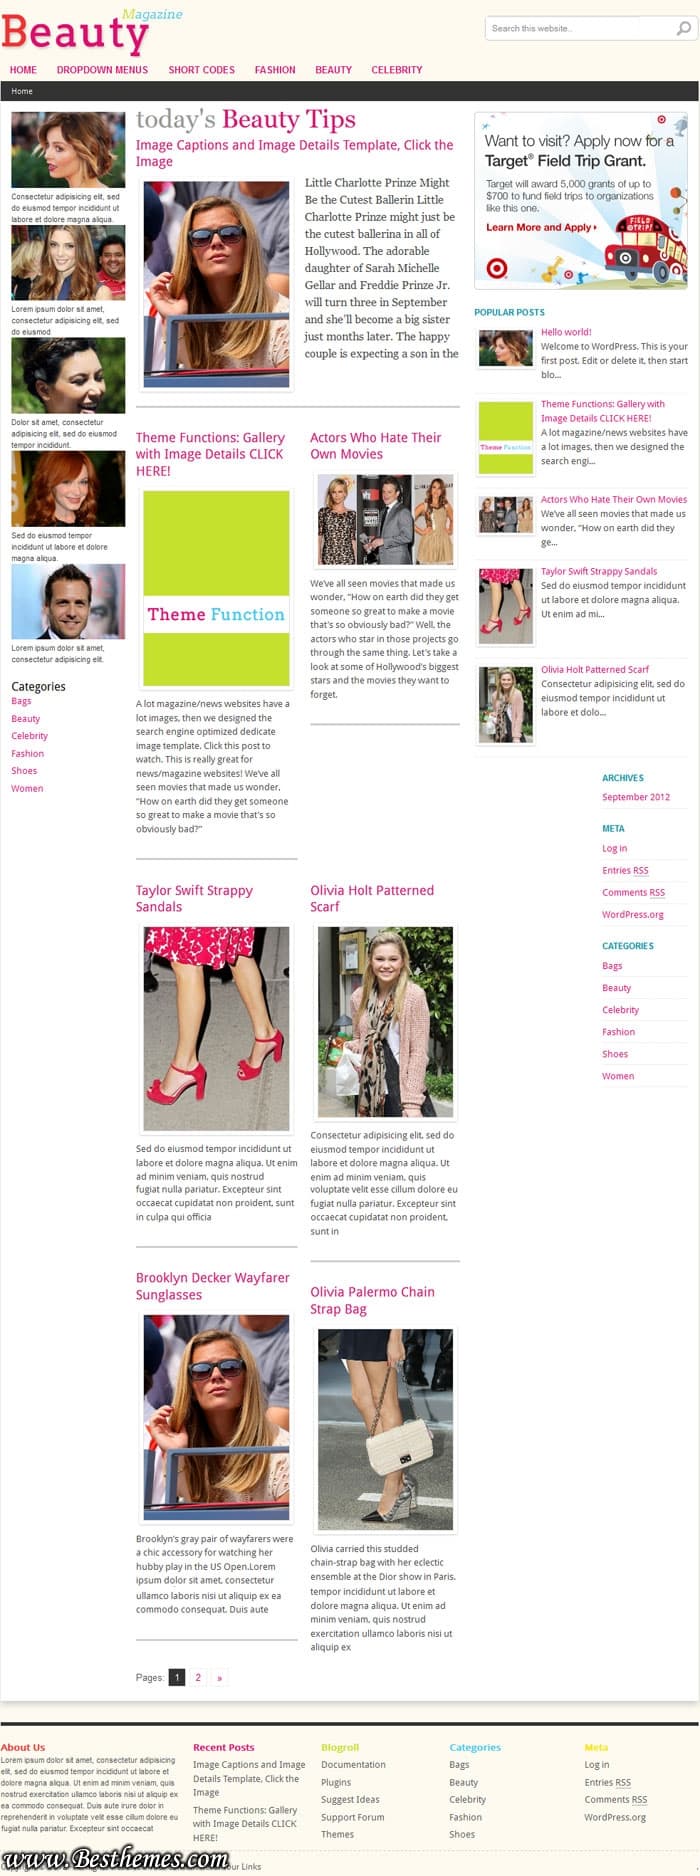 Beauty Magazine Premium WordPress Theme From Clover Theme, Best Feminine Blog Theme, Best Woman Magazine WP Template